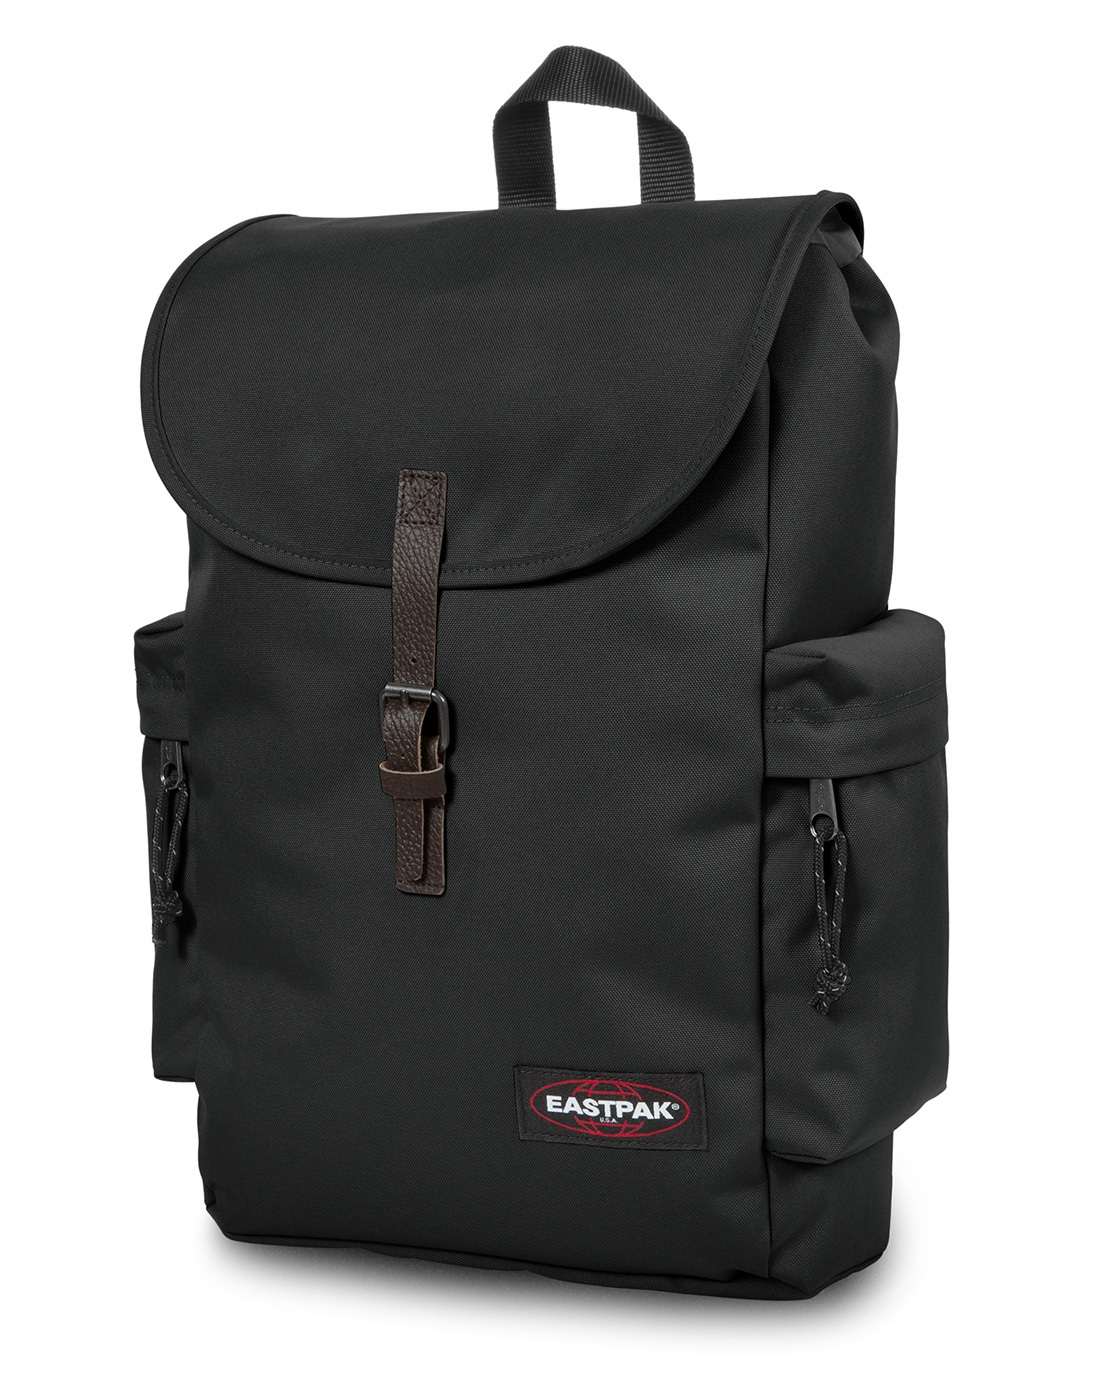 Austin EASTPAK Retro 60s Laptop Backpack - Black